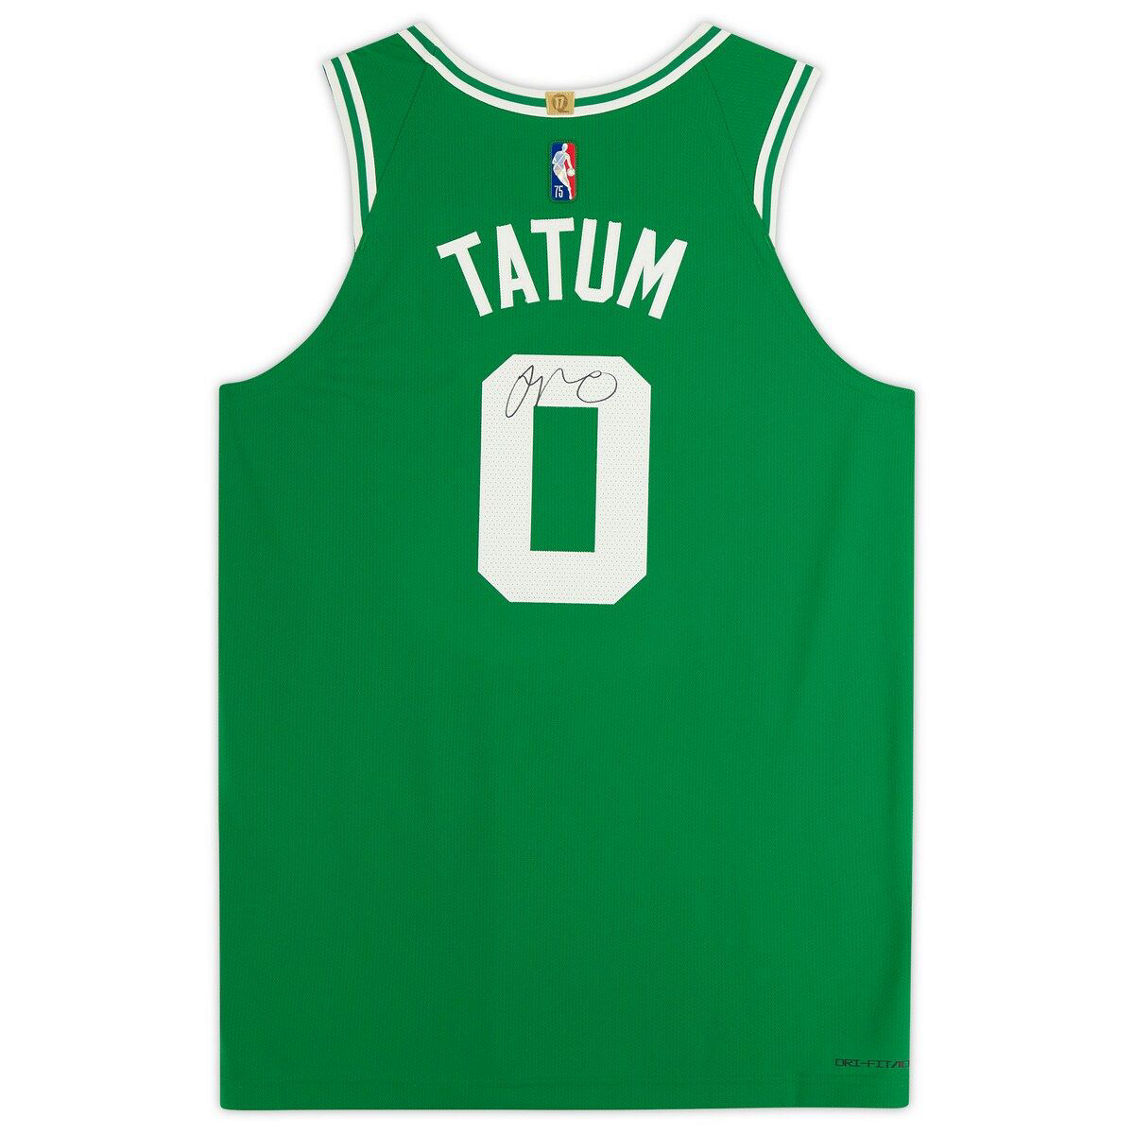 Fanatics Authentic Jayson Tatum Boston Celtics Autographed Green Authentic Jersey - Image 3 of 4